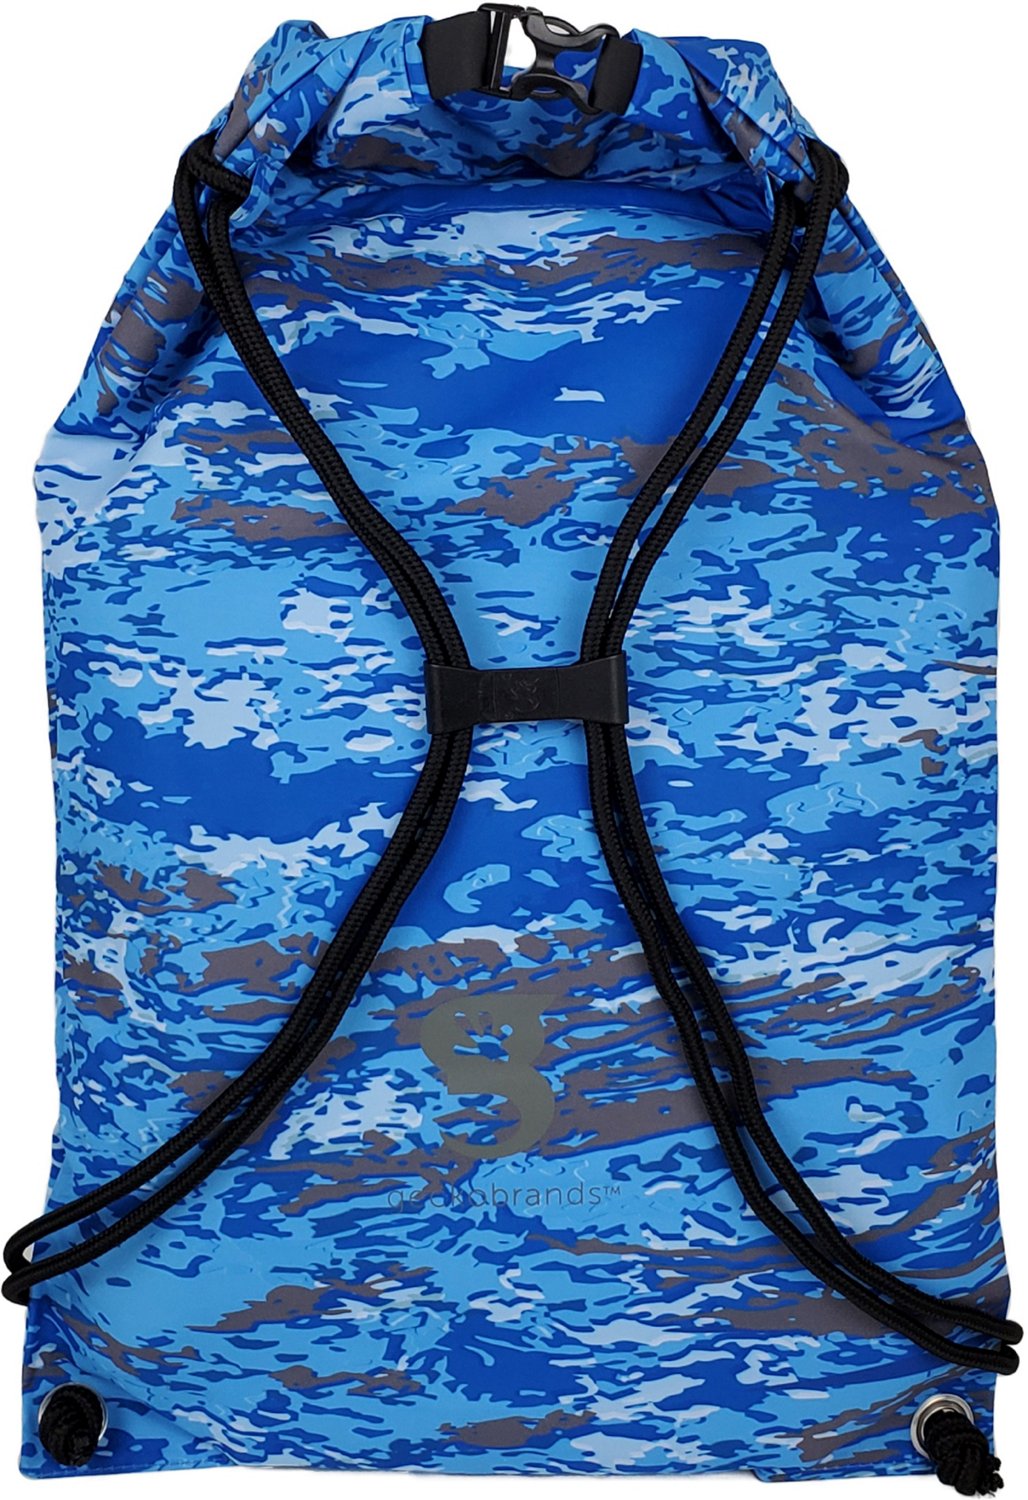 Lightweight Packable Cinch Dry Bag geckobrands Embark Waterproof 10L Drawstring Backpack 